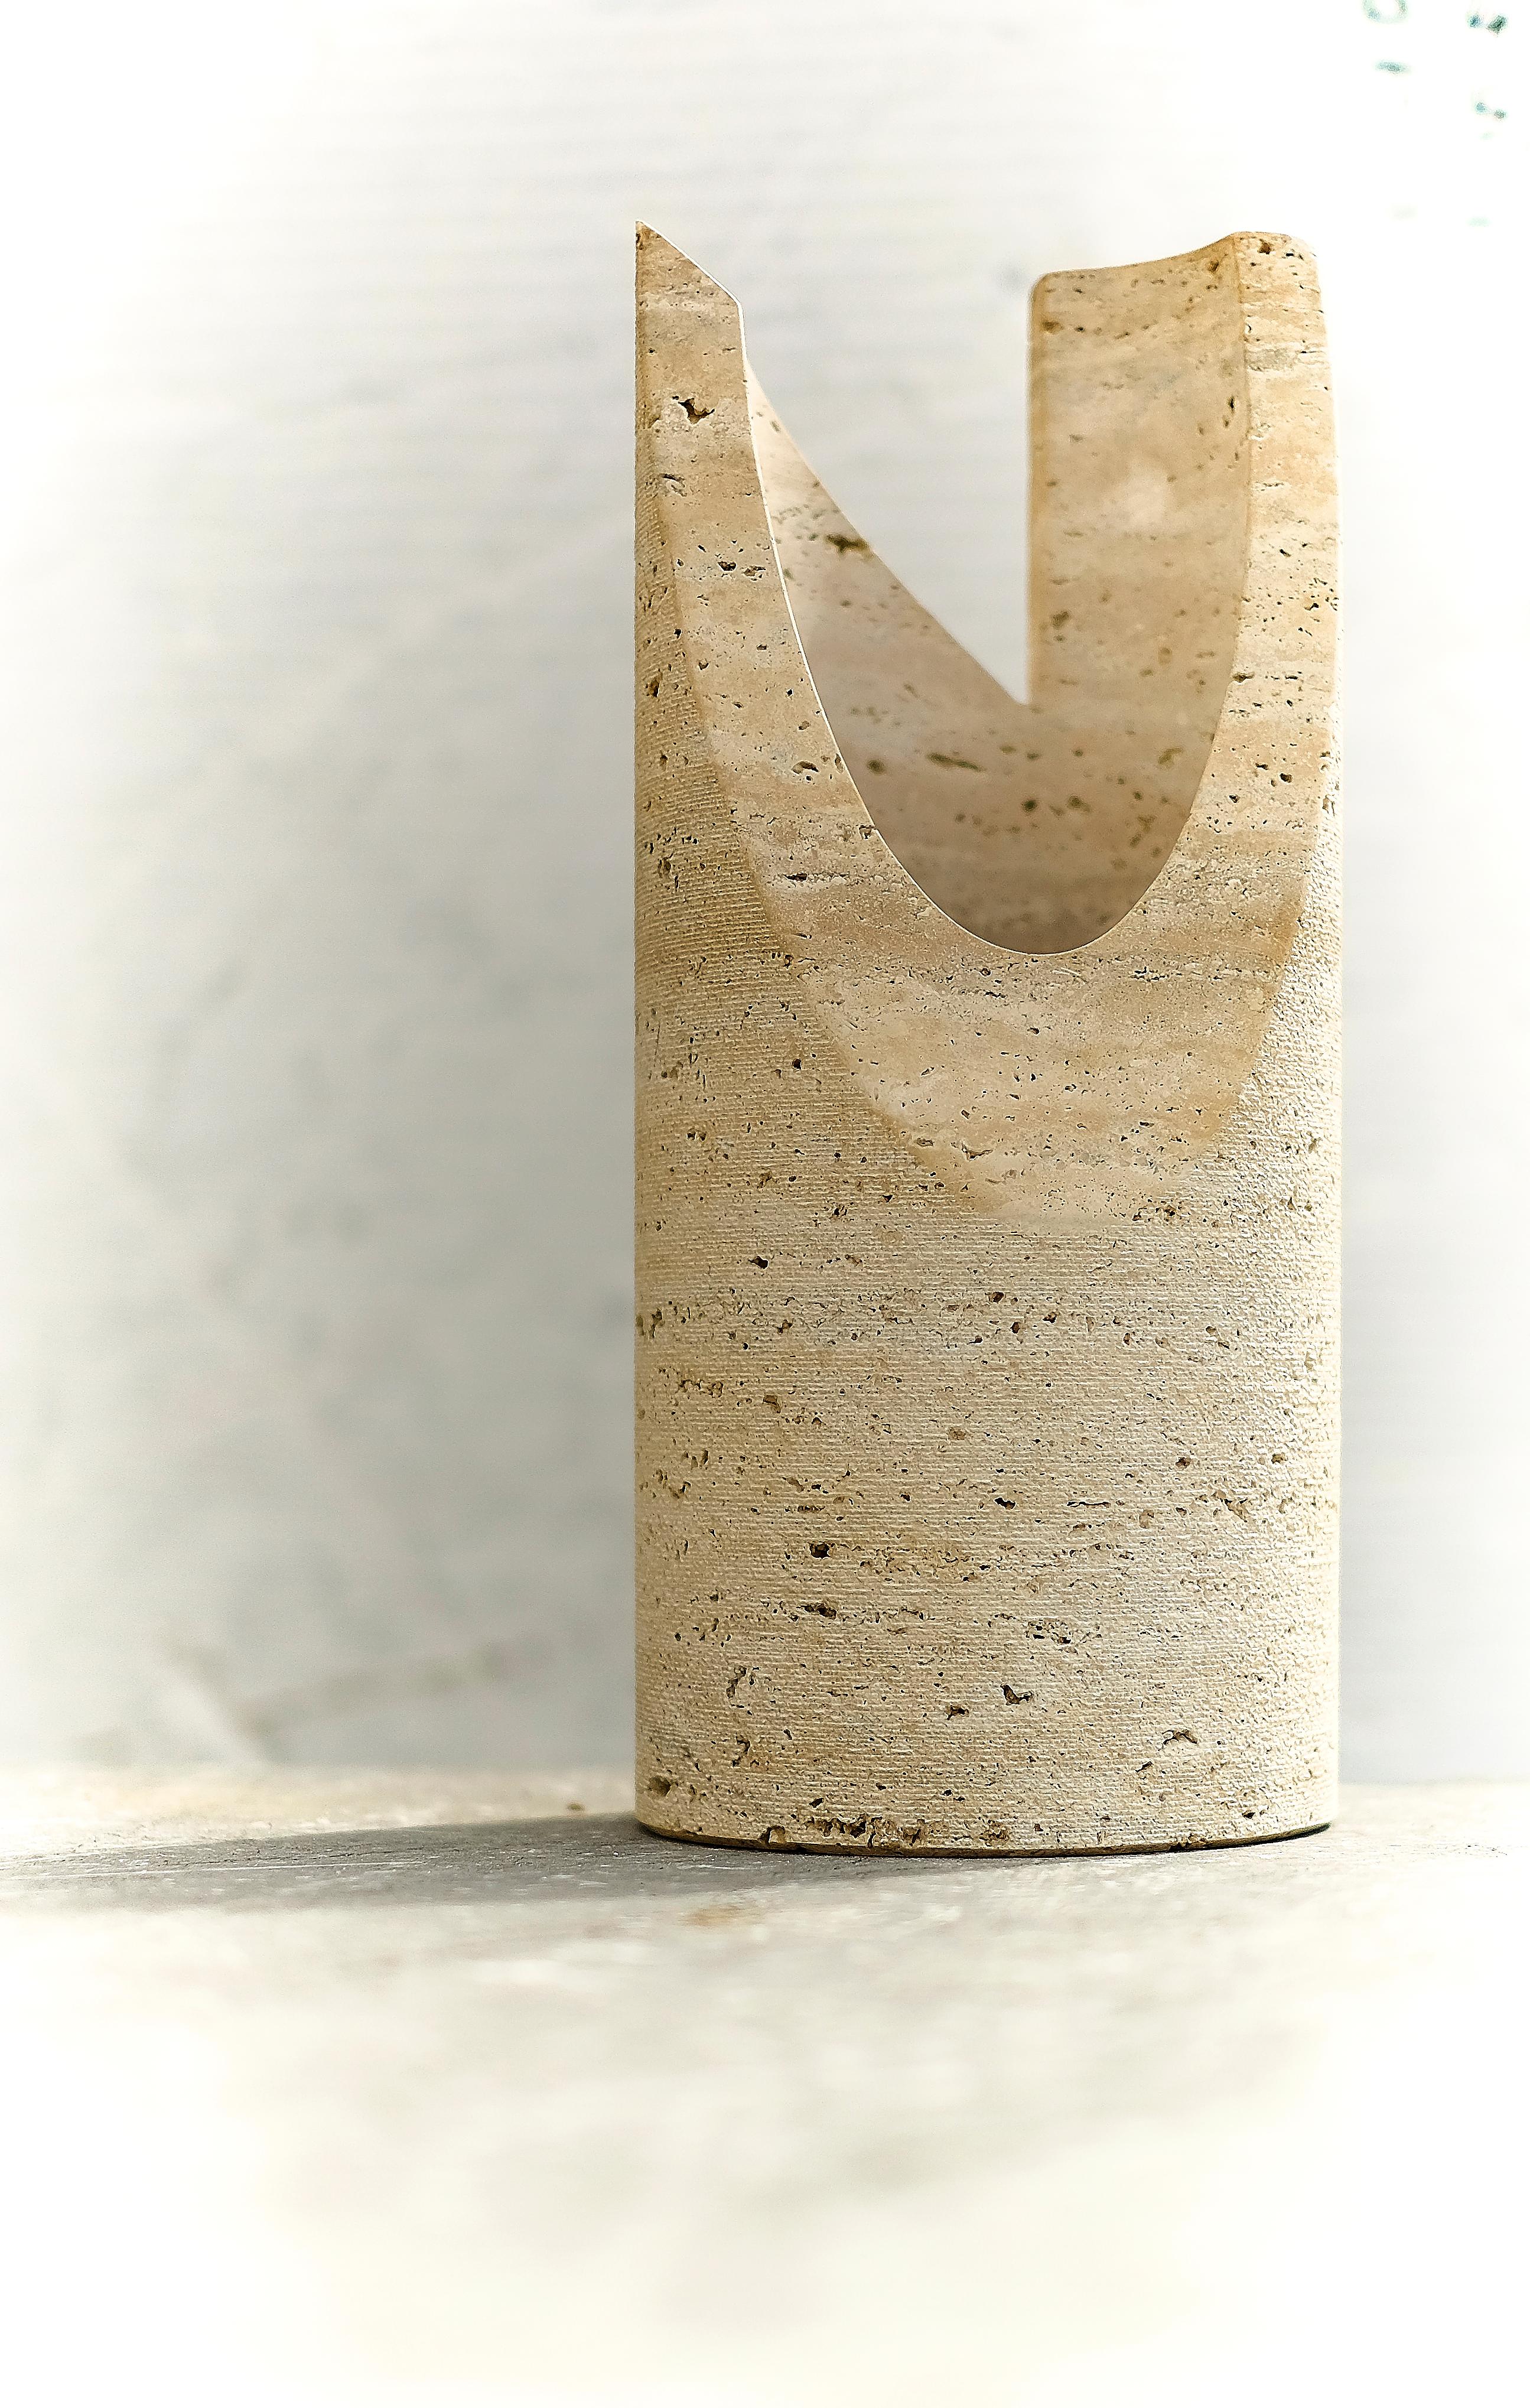 Marble vase PAROS AX designed by E.Mari
Size: Diameter cm. 16 x 30 height.
Materials: White Carrara / national travertine
Designed by: Enzo Mari.